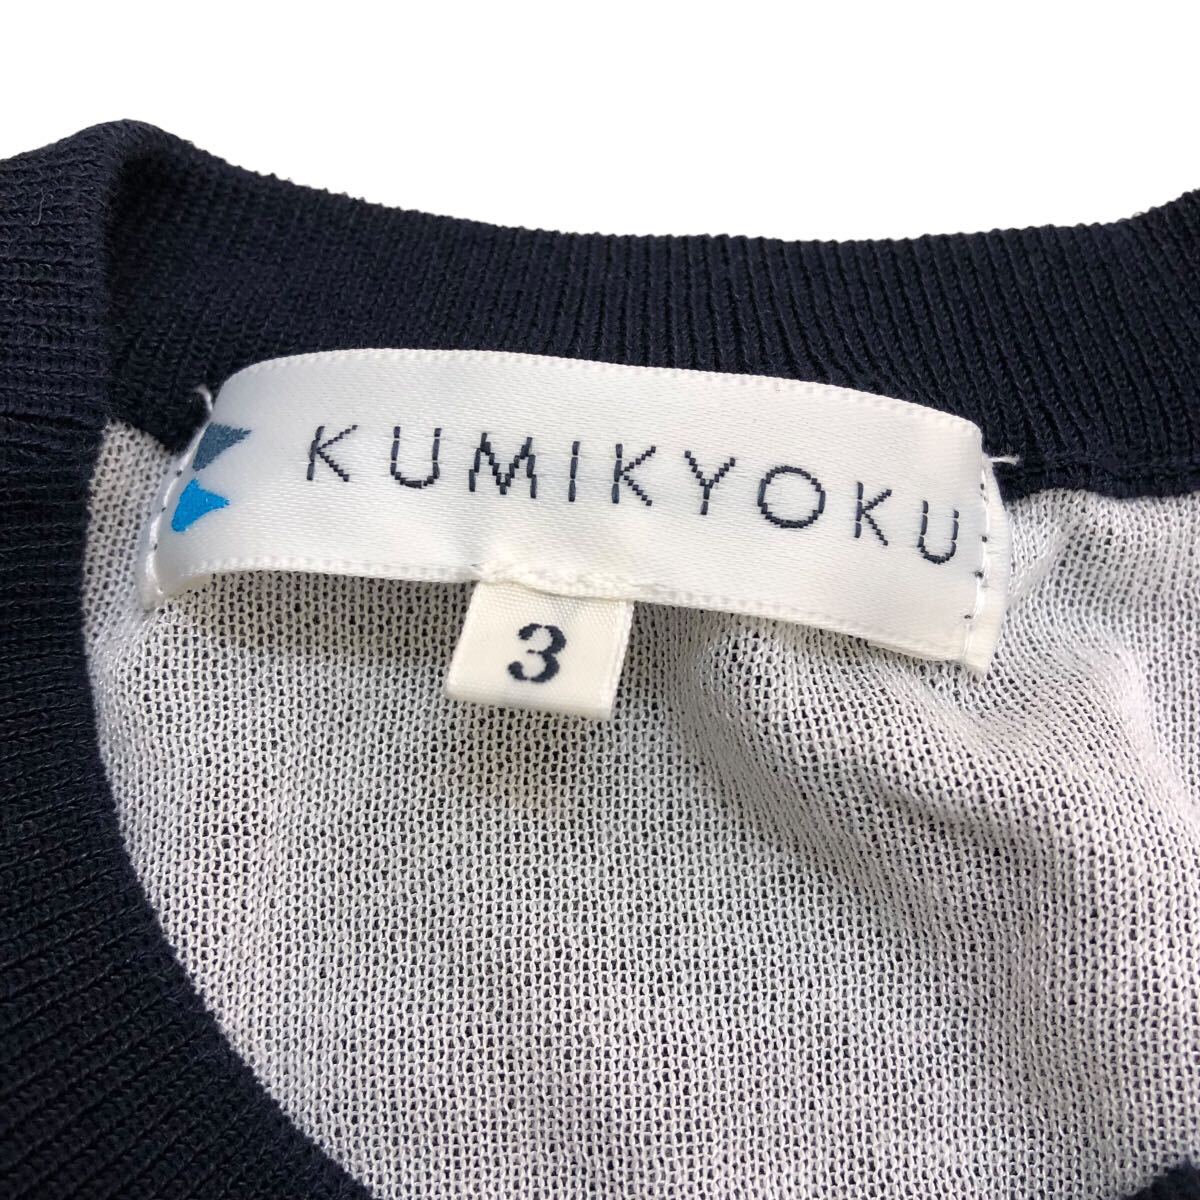 S207 KUMIKYOKU Kumikyoku кардиган tops перо ткань tops хлопок . женский 3 темно-синий темно-синий 